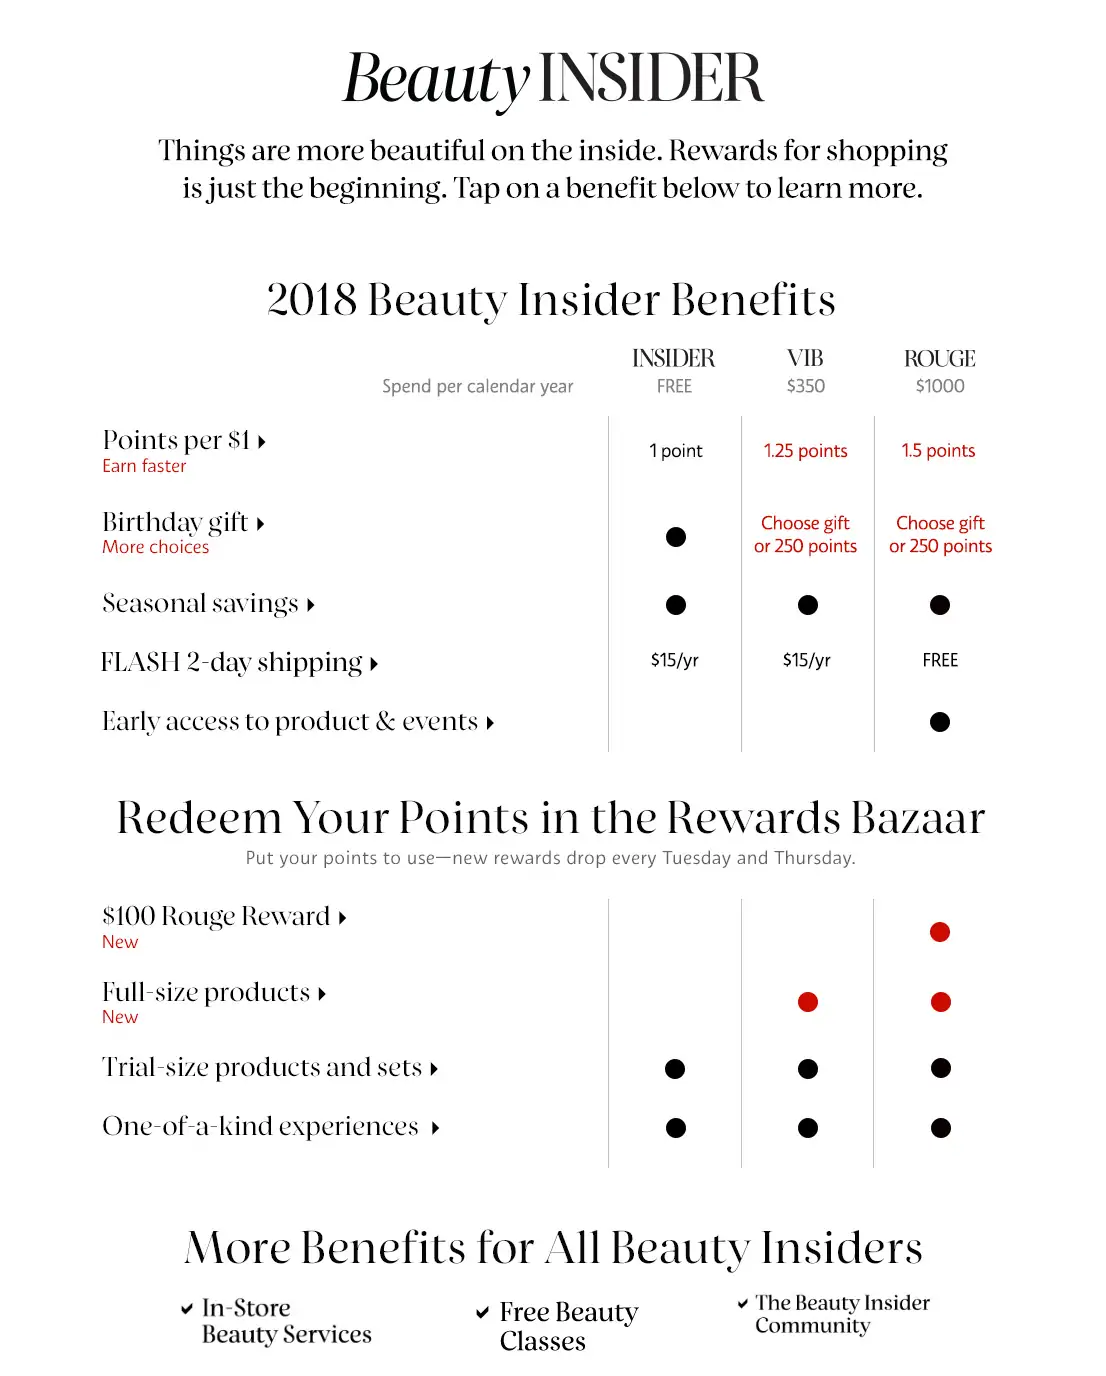 Sephora Loyalty Program case study, A Case Study on What Makes the Sephora’s Loyalty Rewards Program Successful?